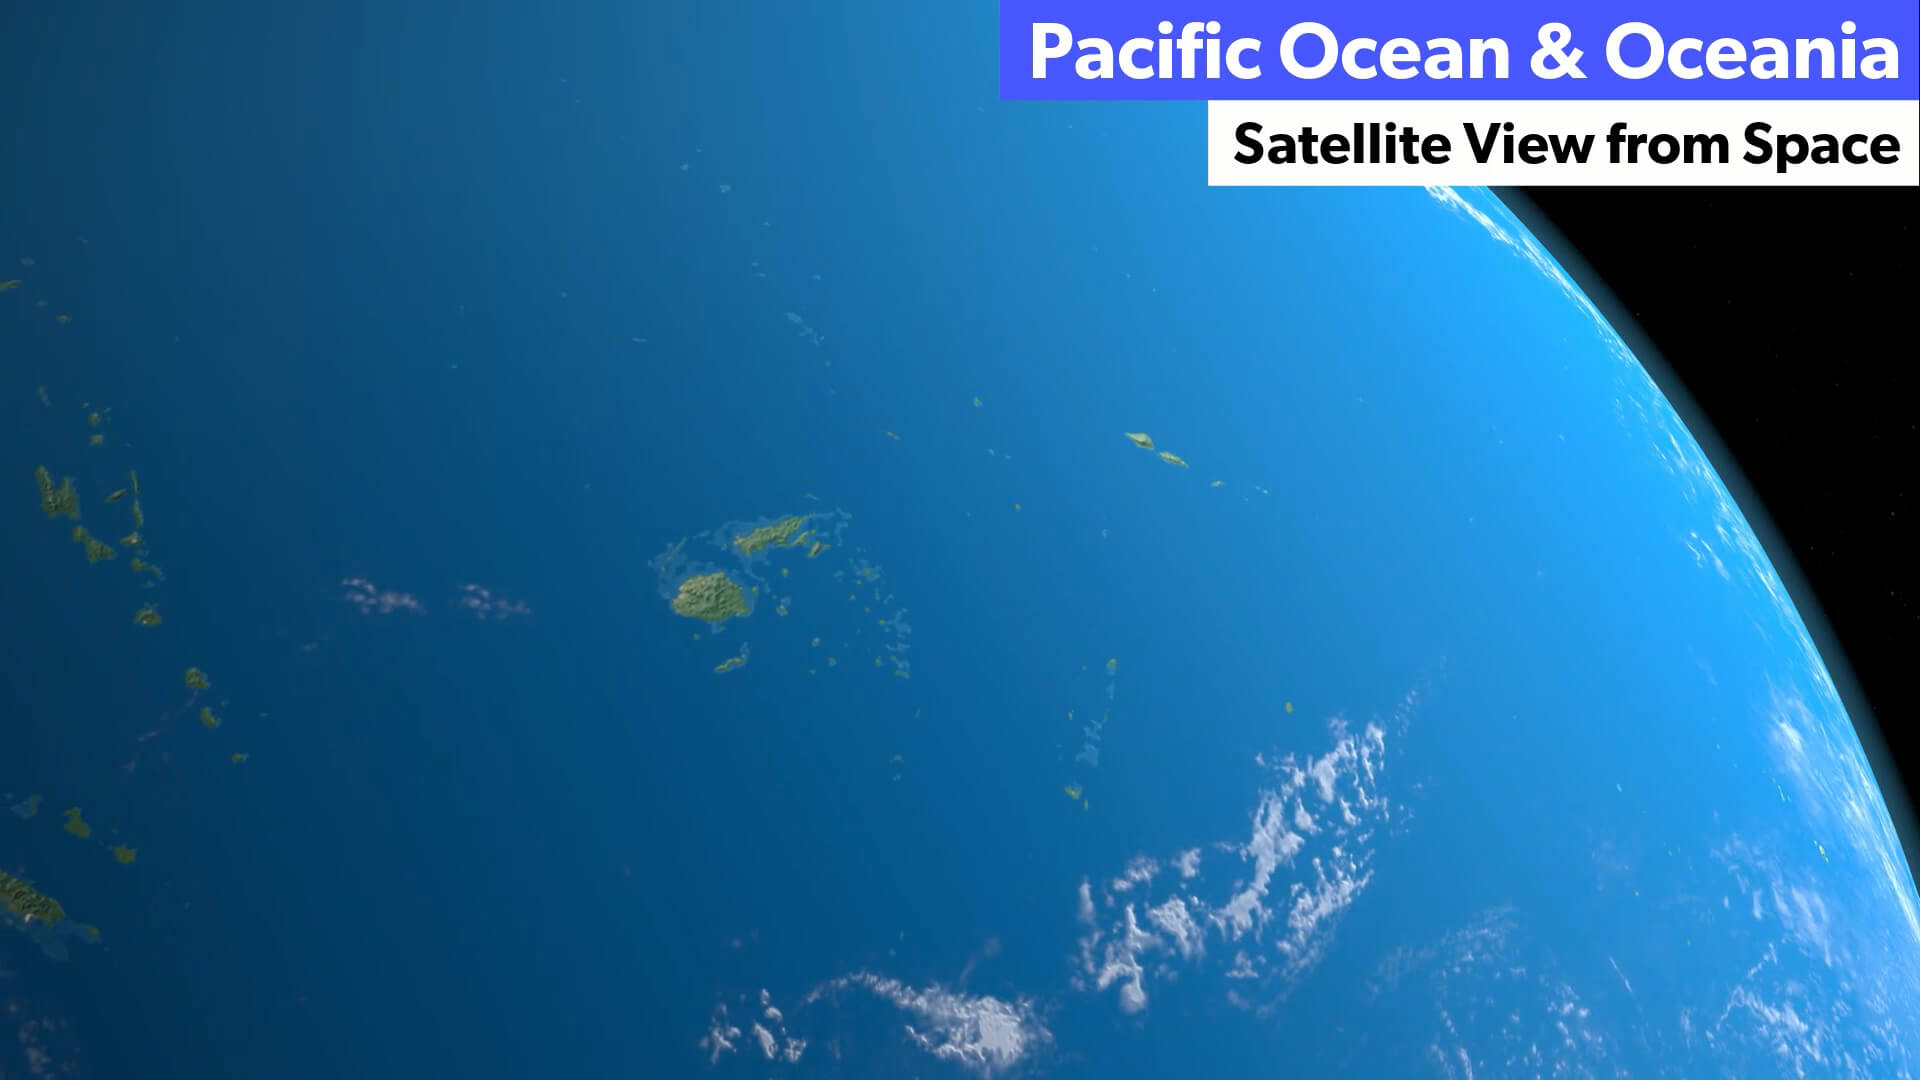 Pacific Ocean and Oceania Satellite View